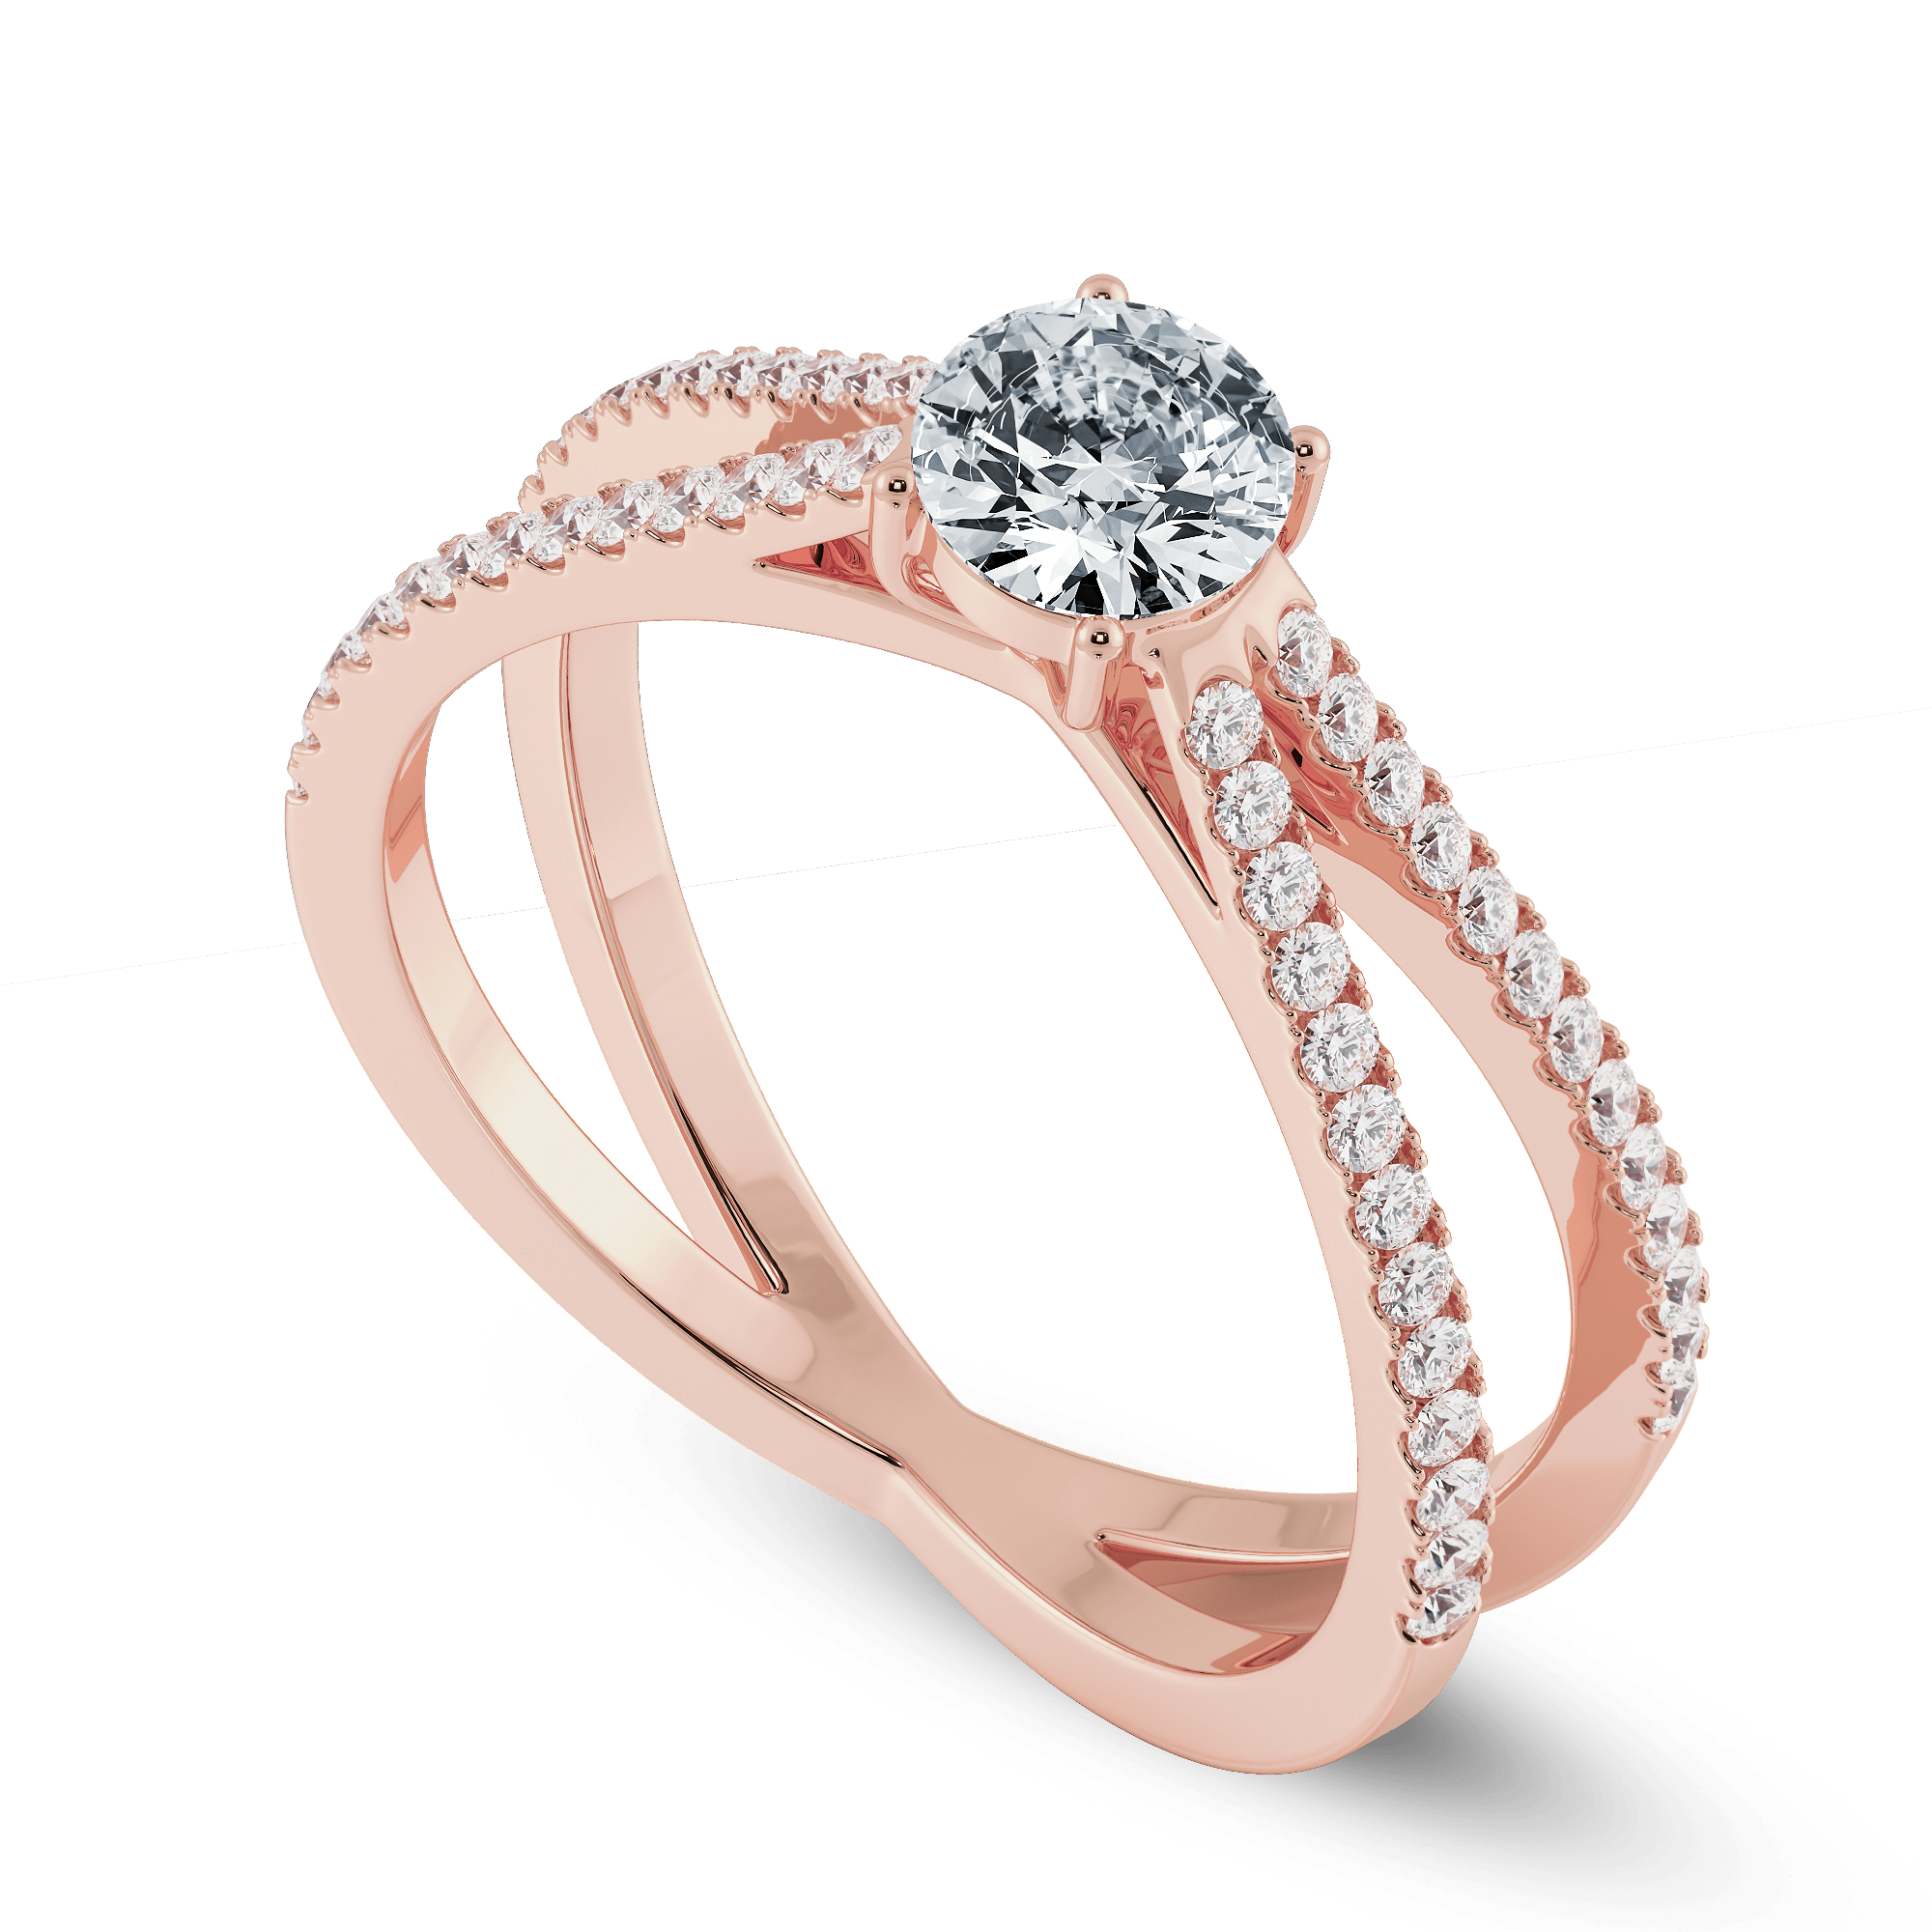 11.29ct Fancy Yellow-Brown Diamond, 18K Rose Gold Ring – Neil Lane Couture